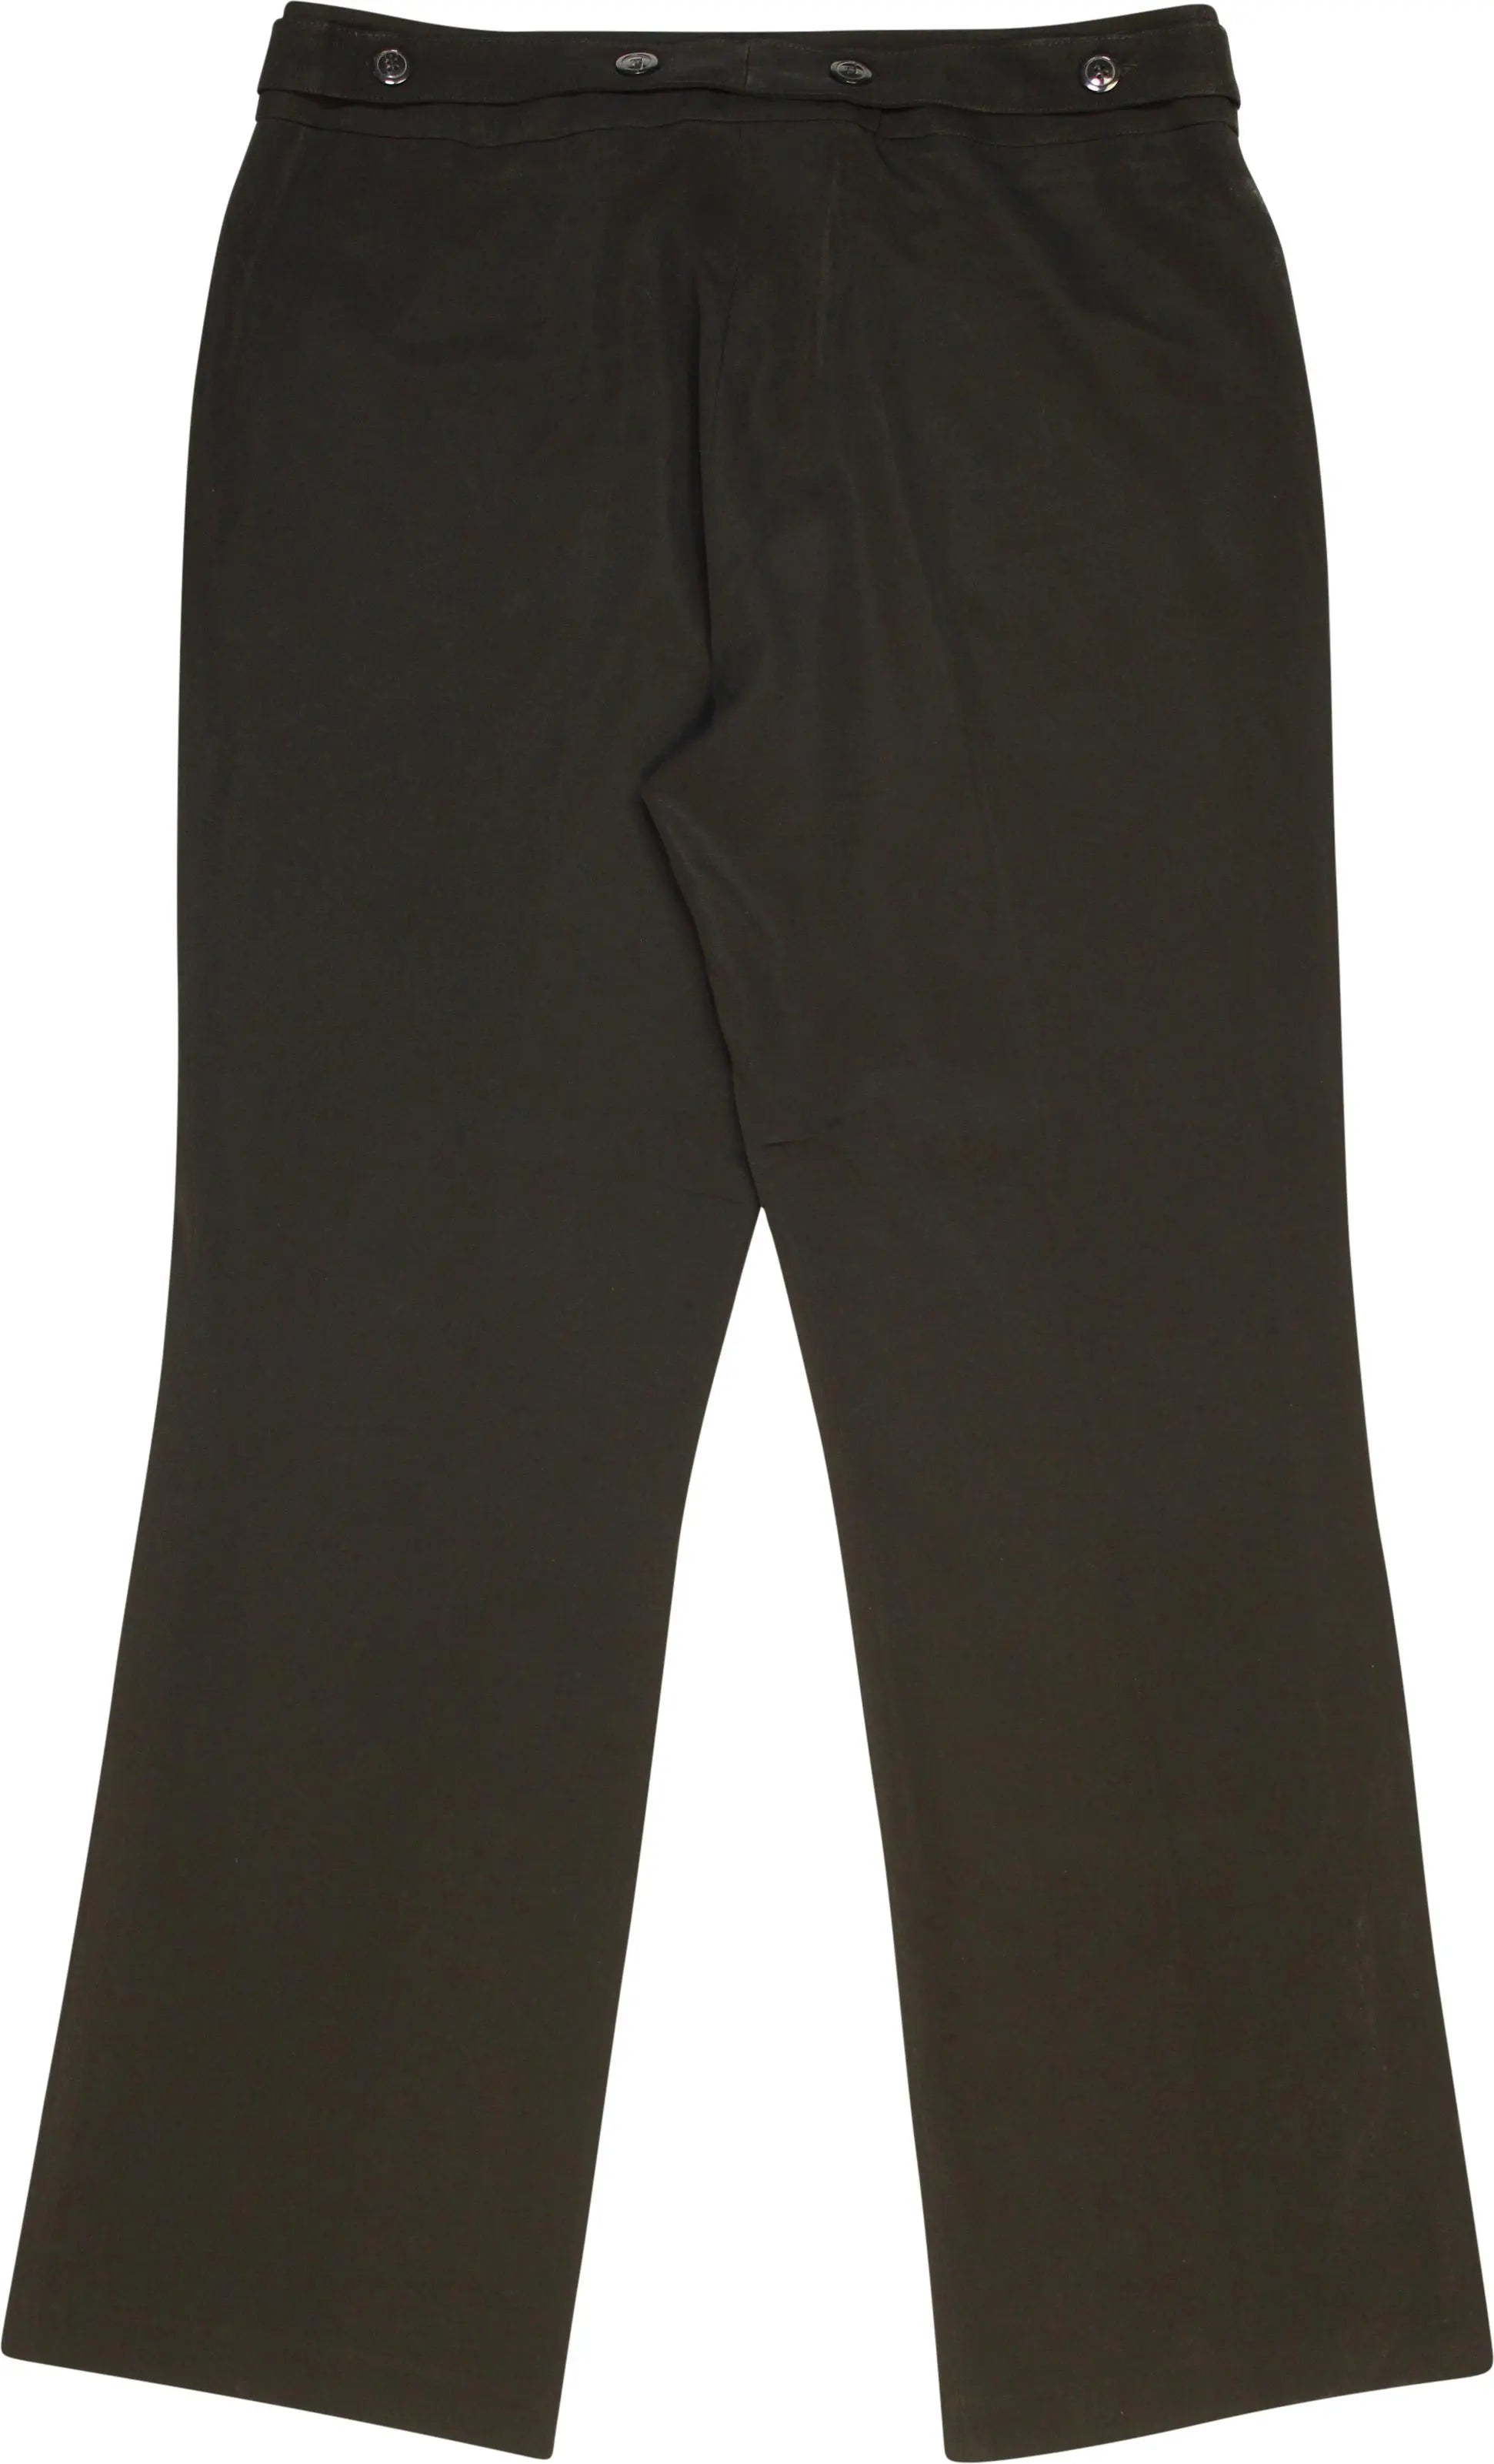 Miss Etam - Black Pants- ThriftTale.com - Vintage and second handclothing